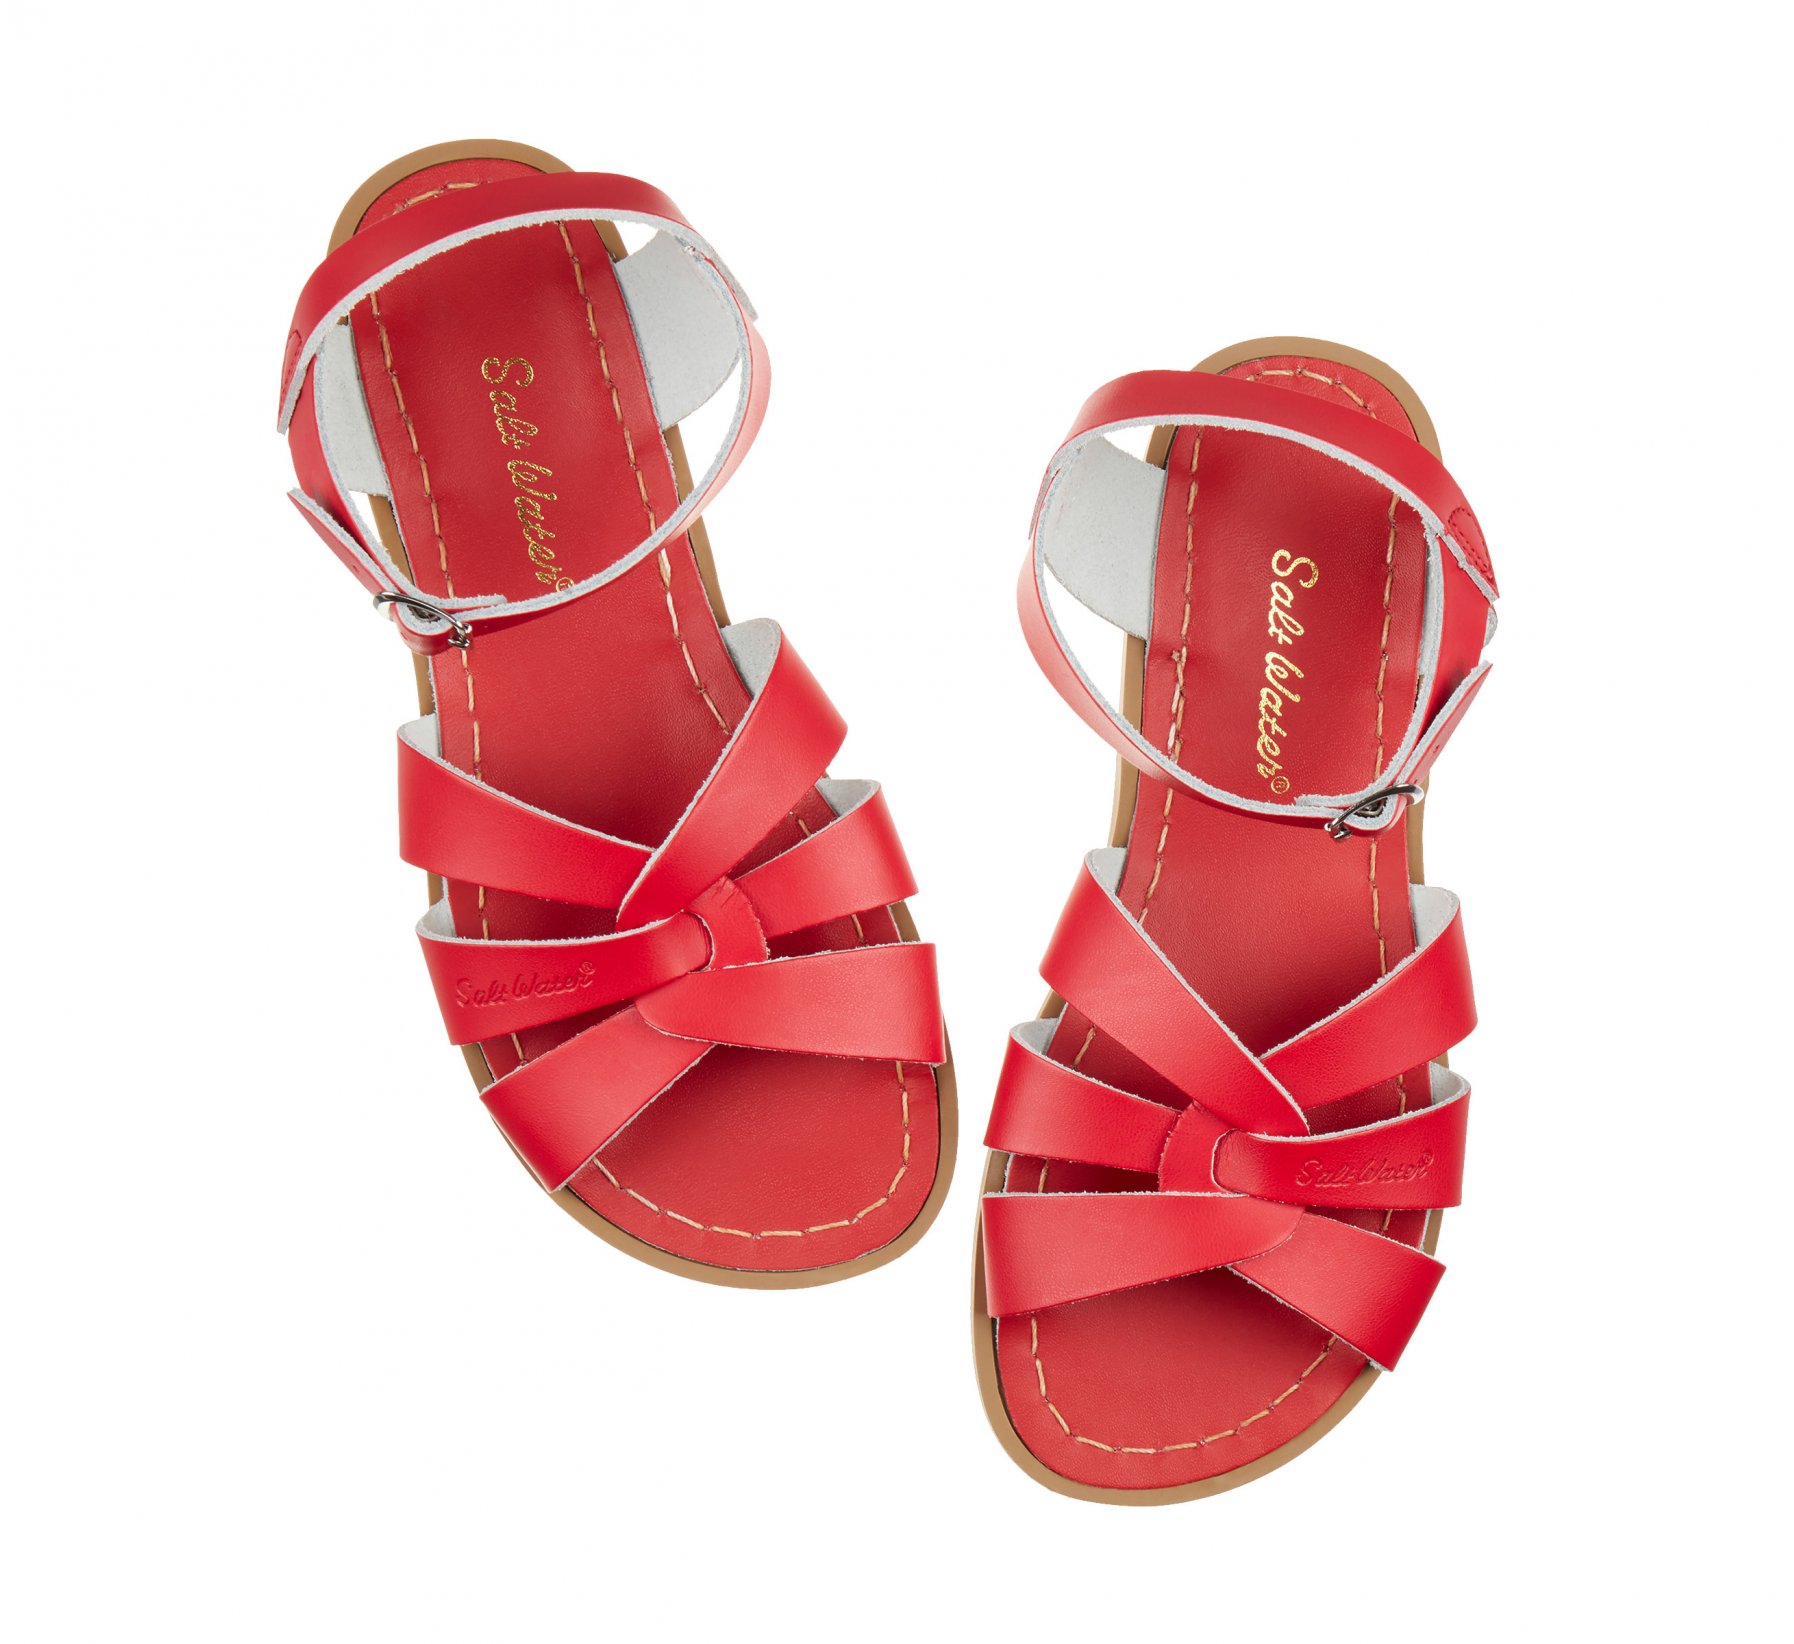 Original Red Kids Sandals - Salt Water Sandals